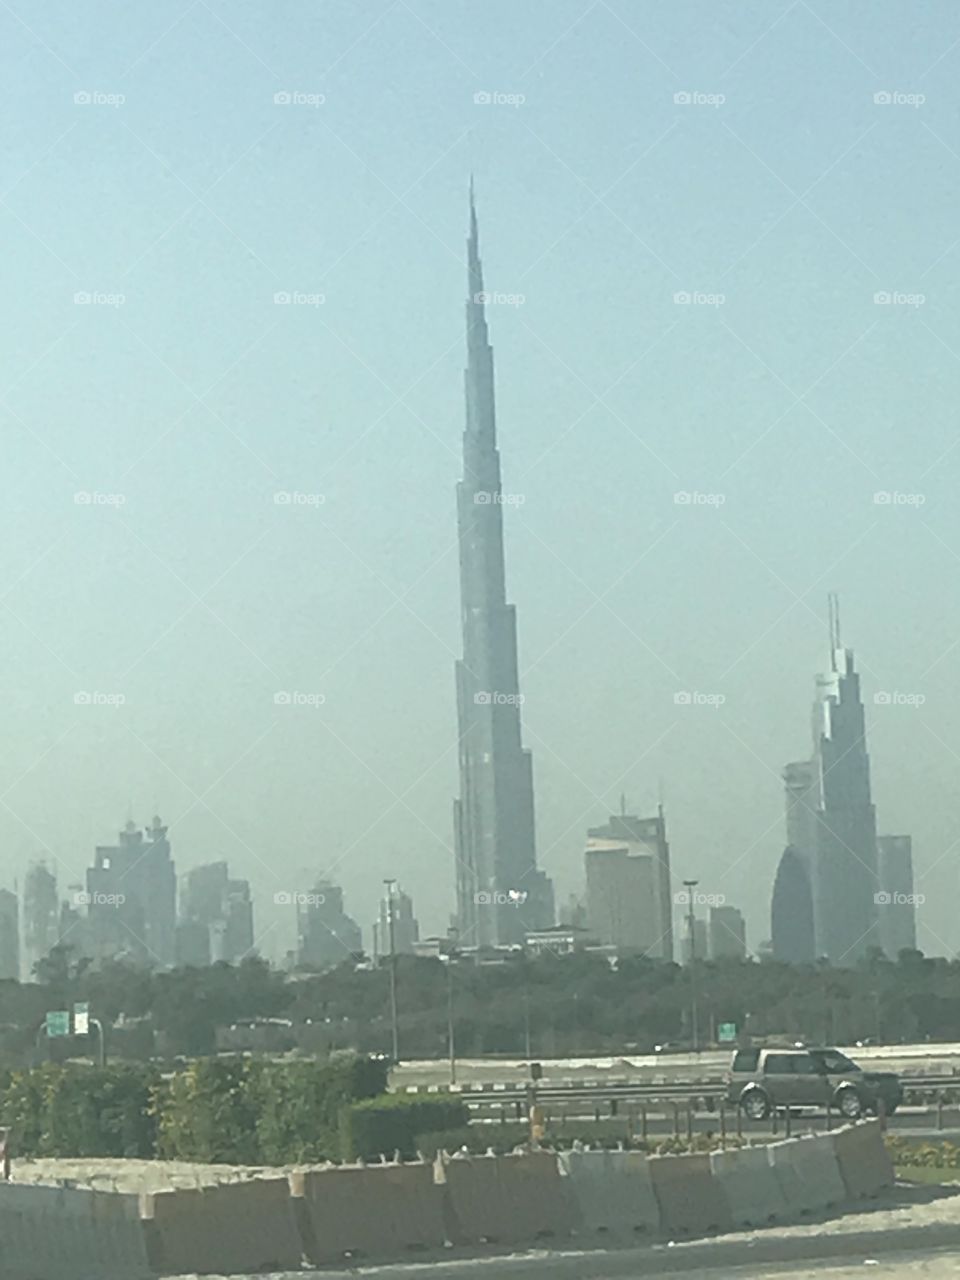 Full pic of the burj khalifa in Dubai 